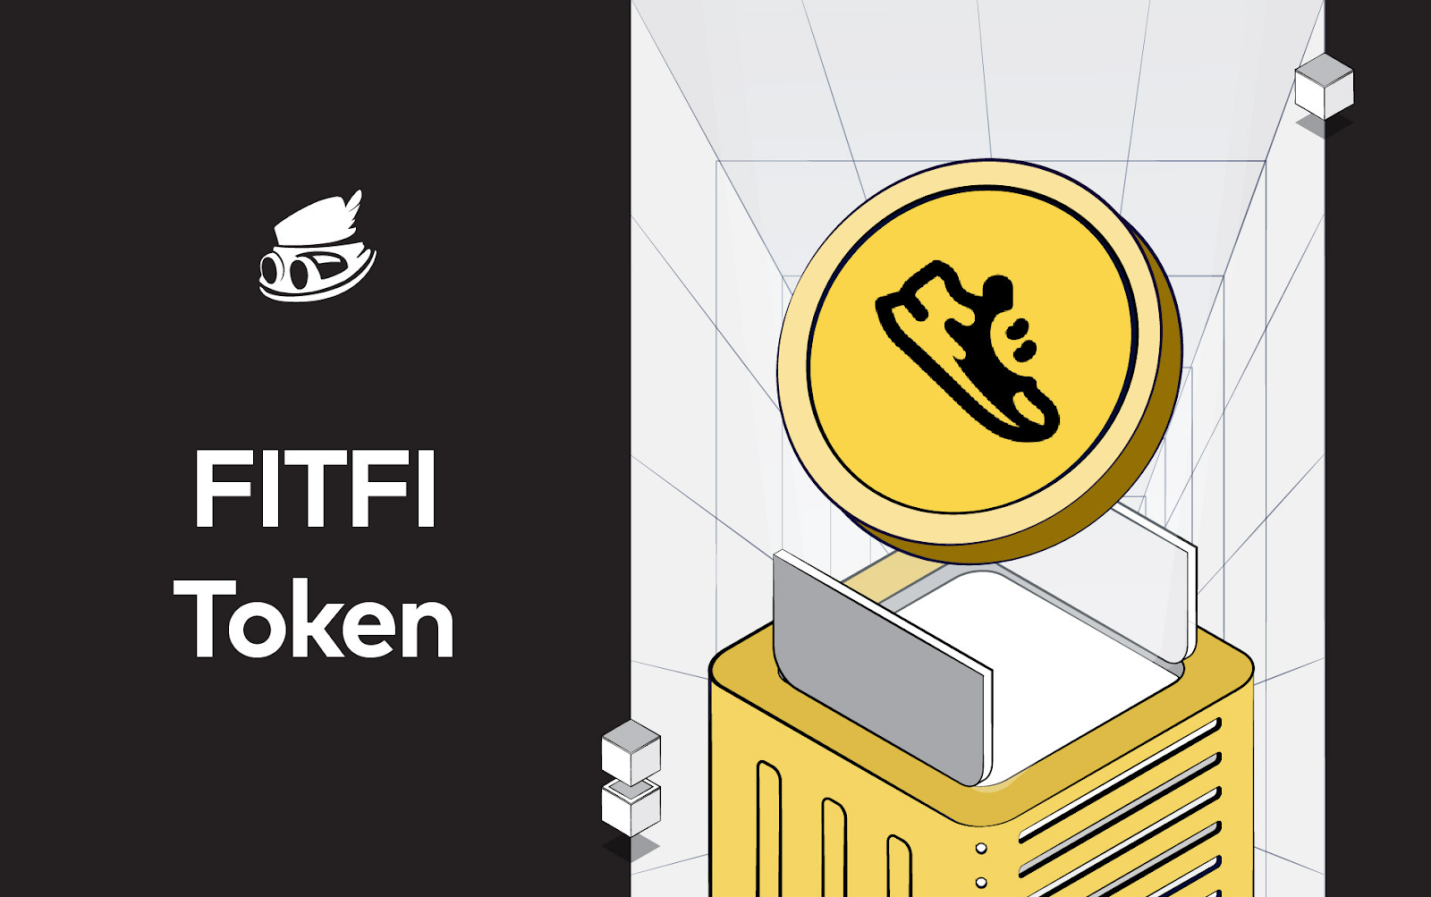 FITFI token